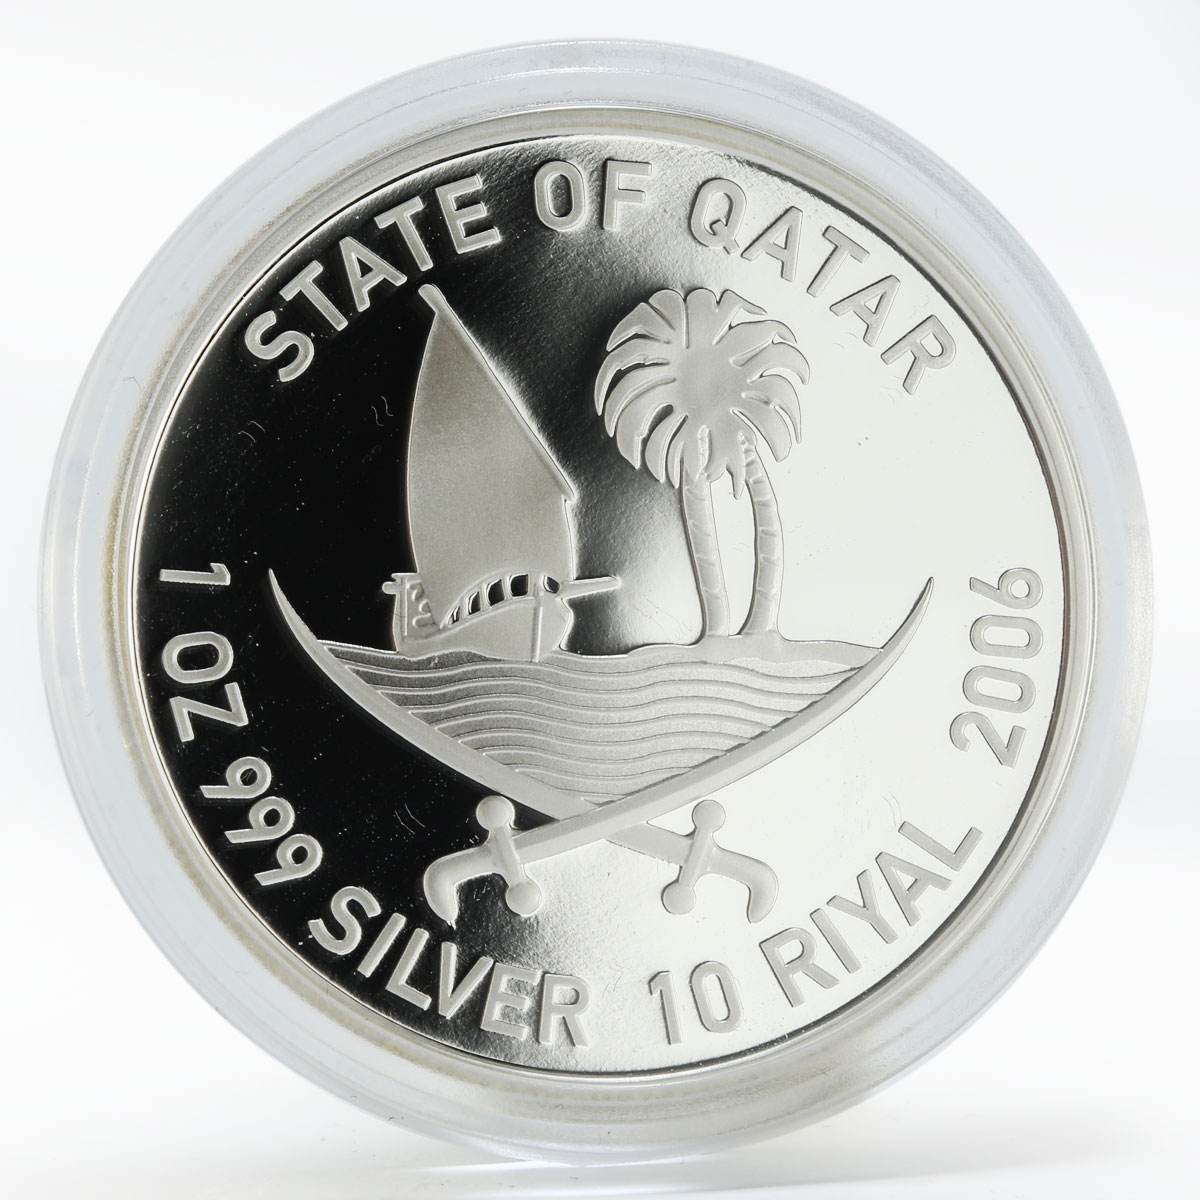 Qatar 10 riyals Asian Games Football proof silver coin 2006